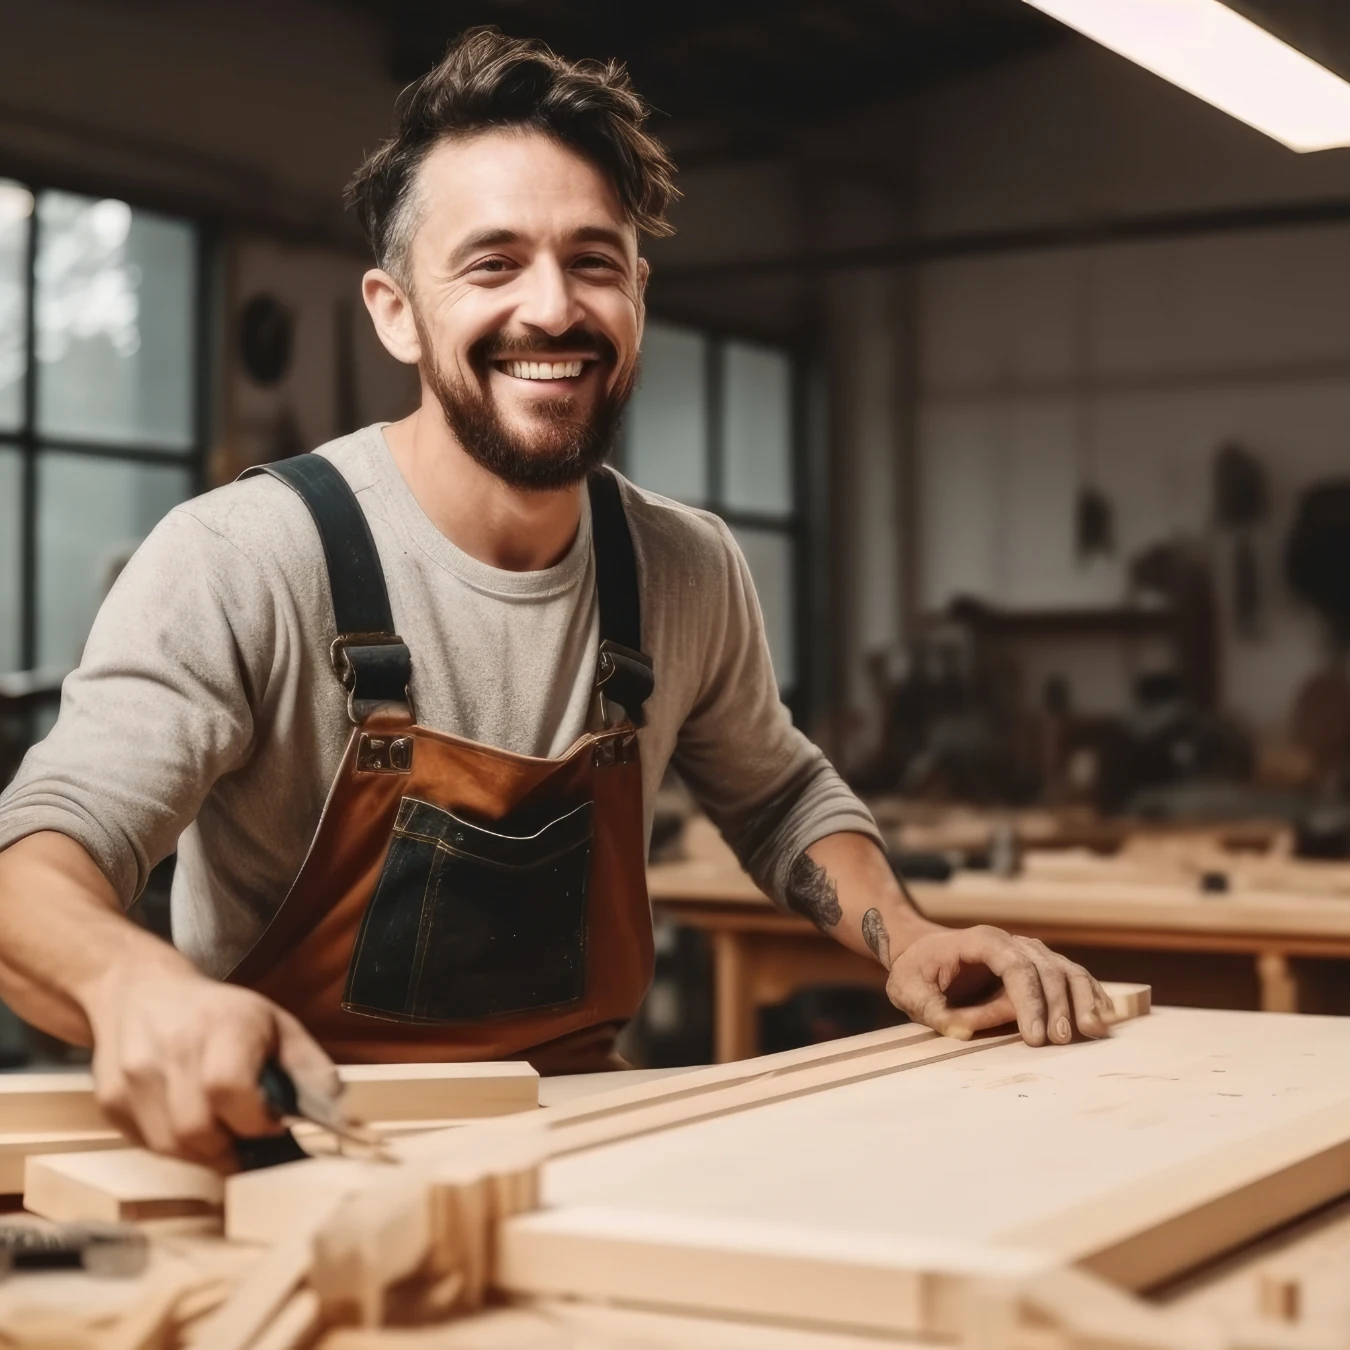 carpenter at work dependent on good vision to keep him safe at work